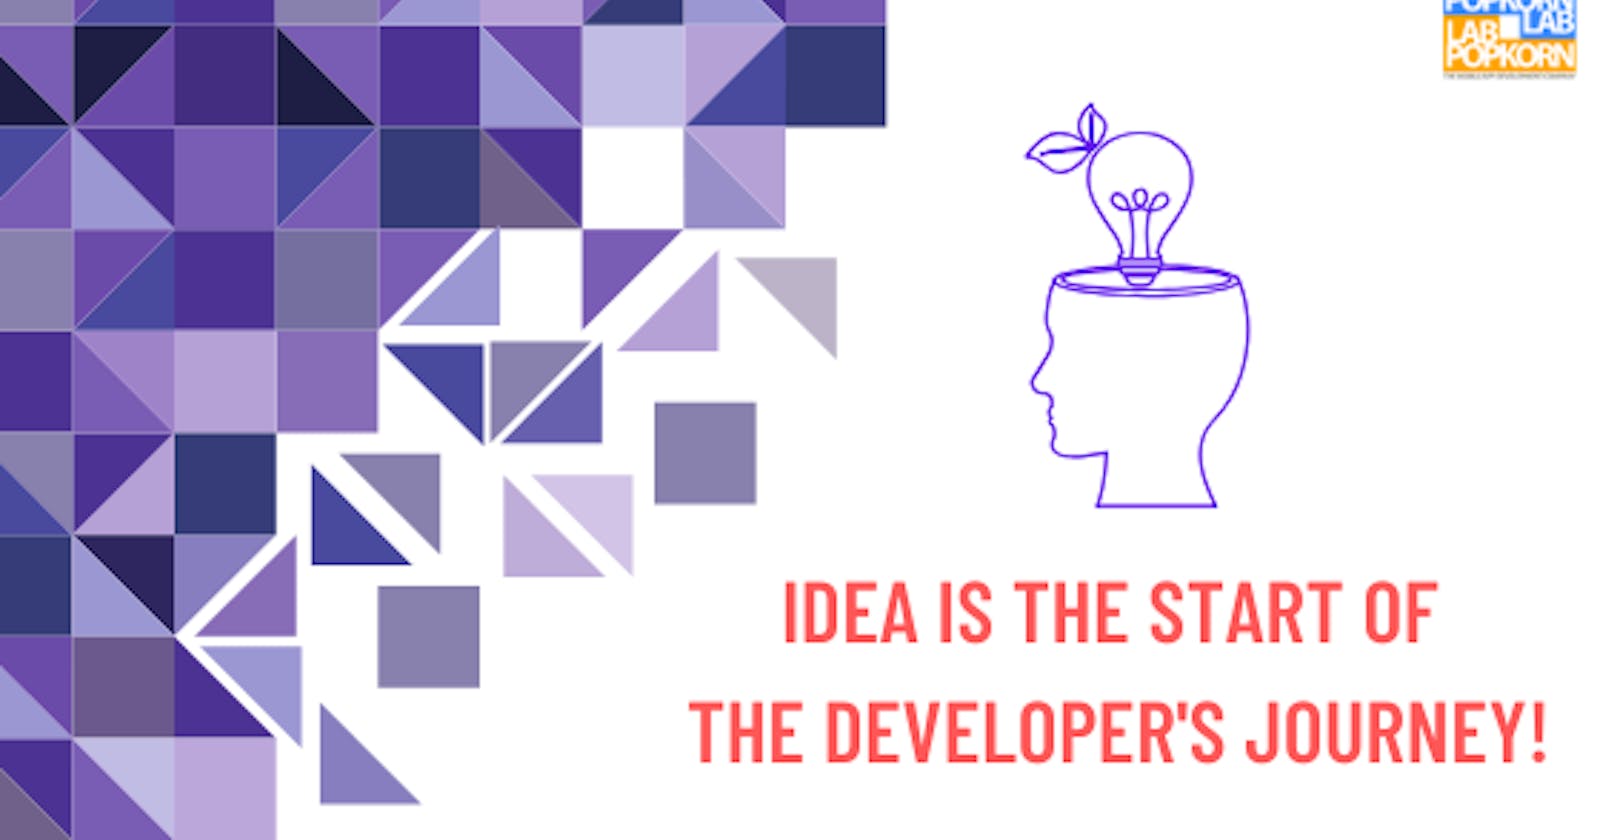 IDEA is the start of the Developer's journey!